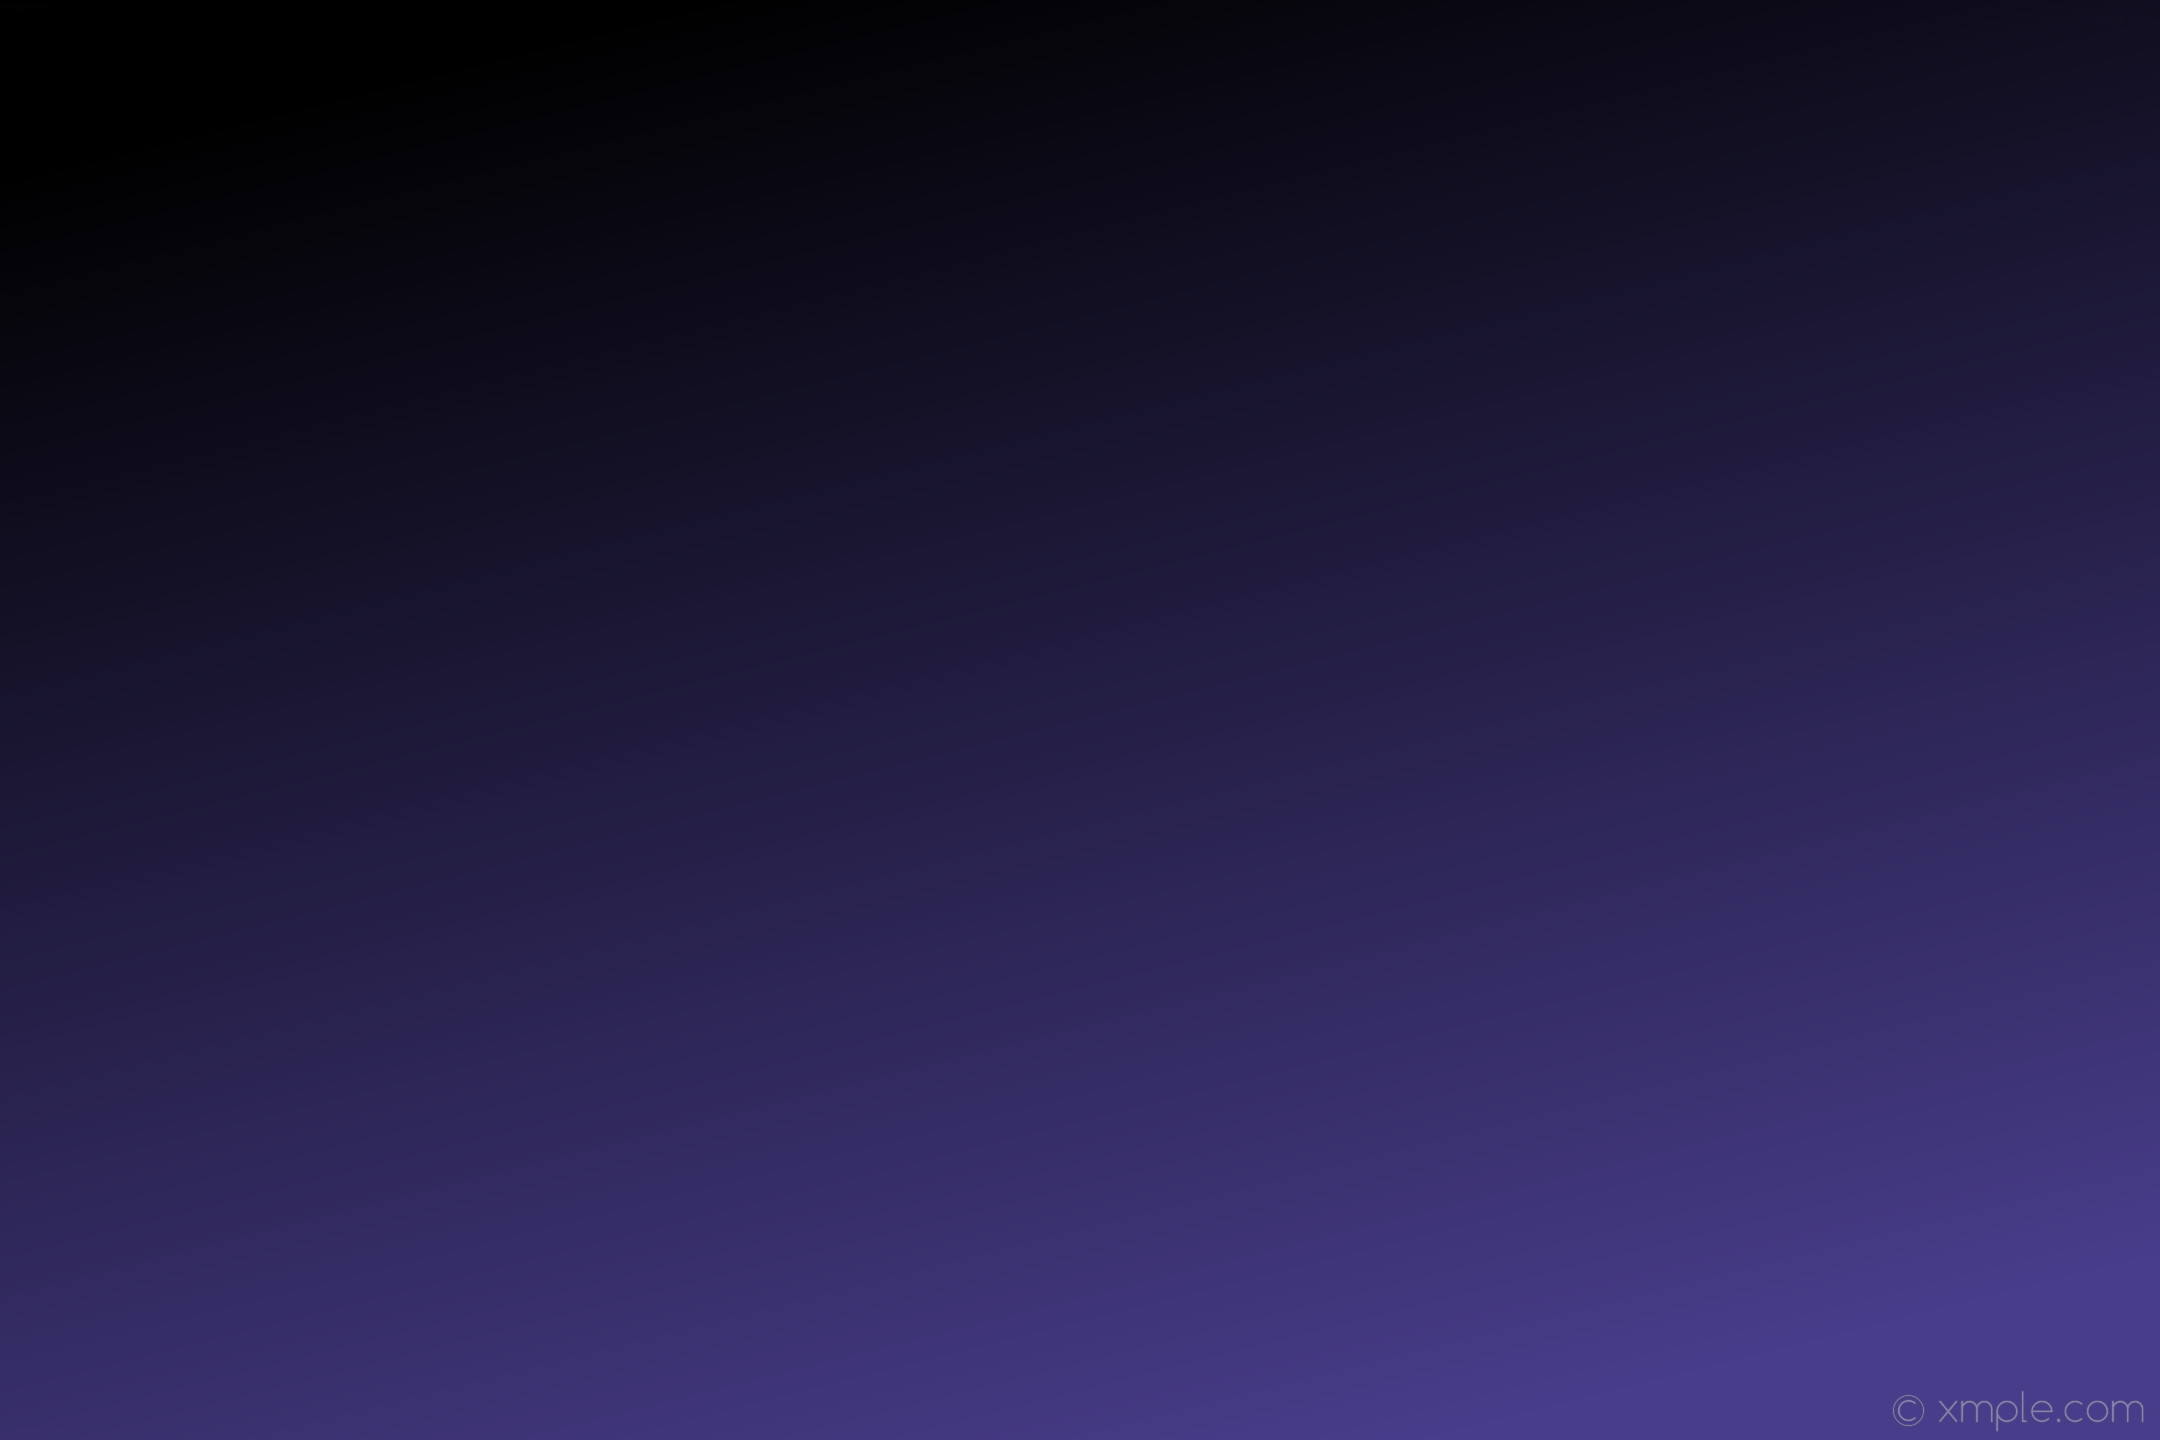 2160x1440 wallpaper black gradient linear purple dark slate blue #483d8b #000000 300Â°